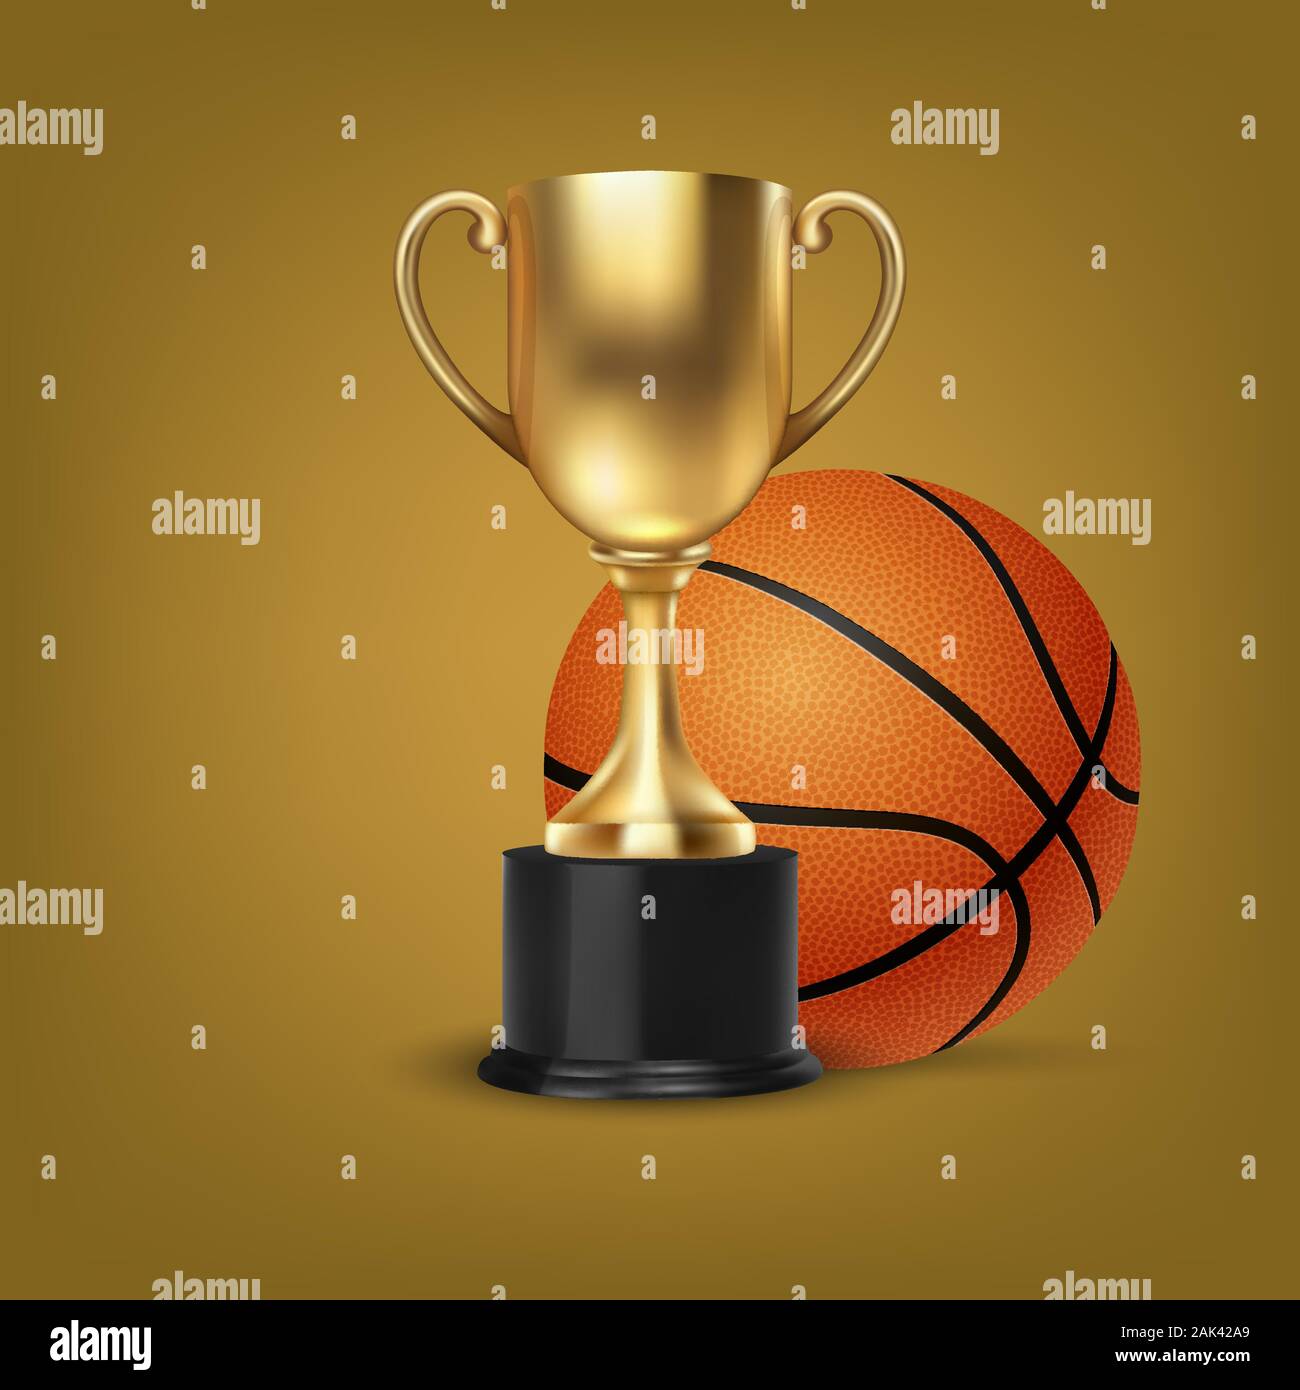 champion trophy basketball